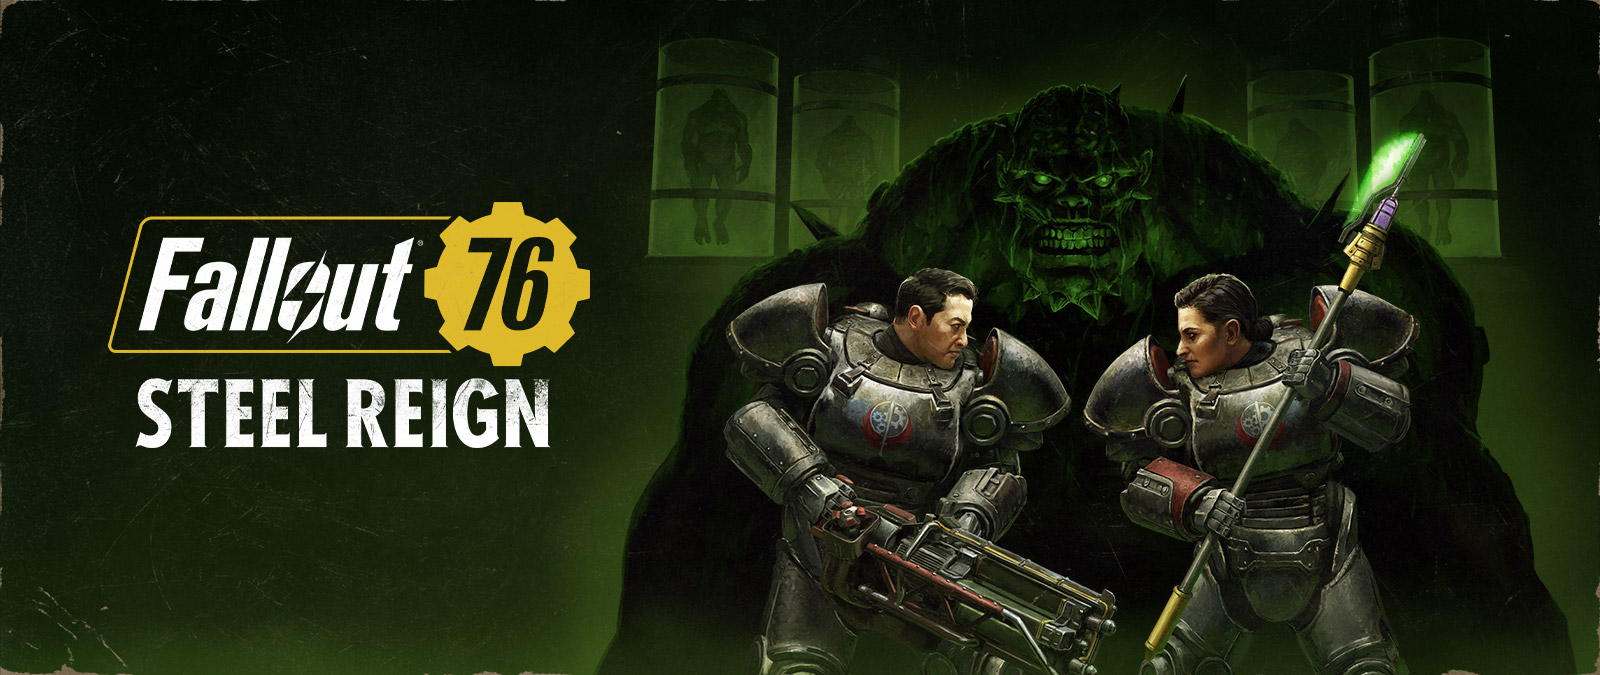 Fallout 76, Steel Reign, два персонажа в доспехах смотрят друг на друга, на заднем плане виден большой монстр.